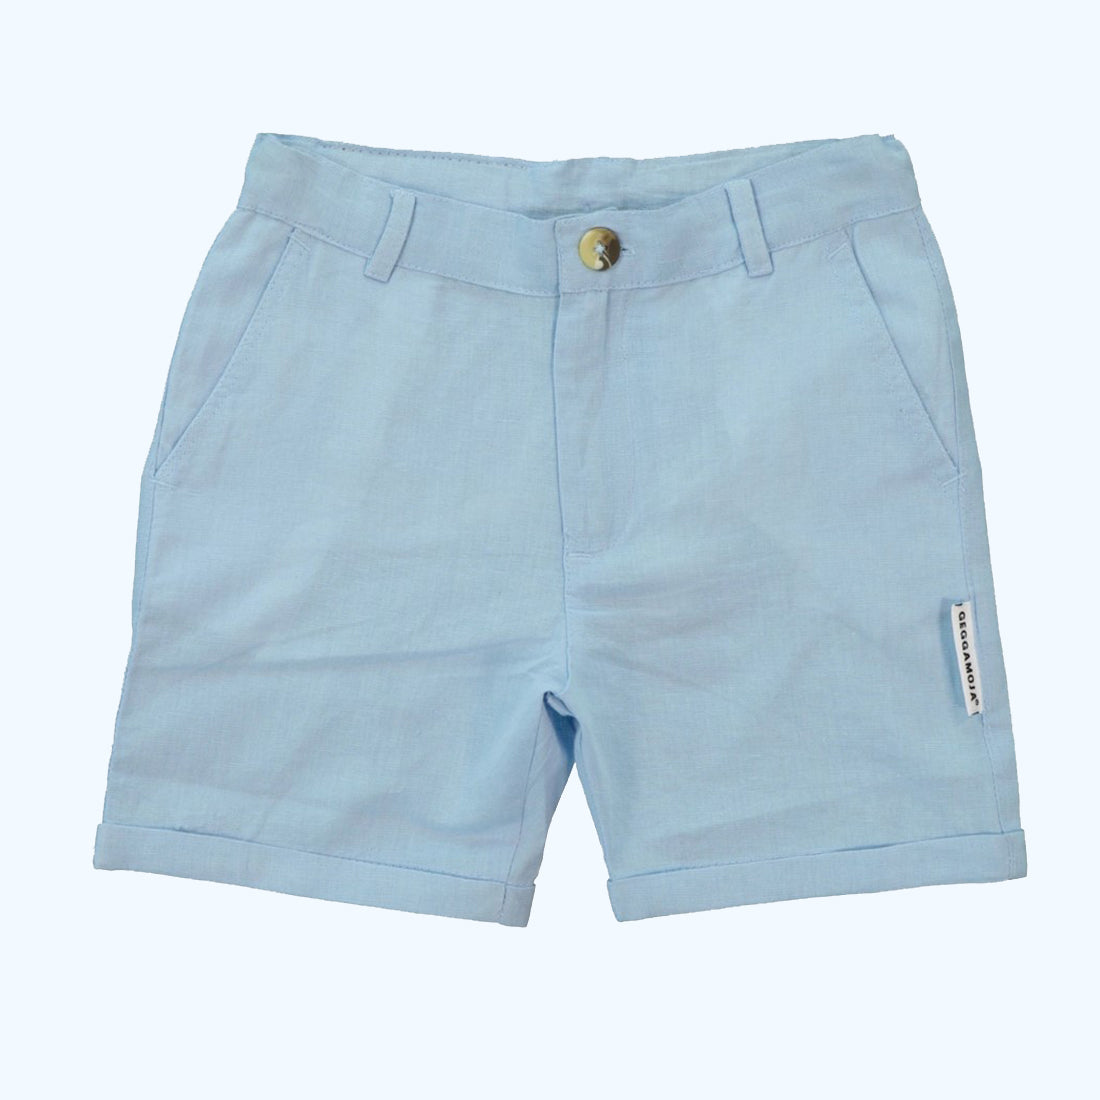 Geggamoja ® Cotton/Linen Chino Shorts - SKY BLUE